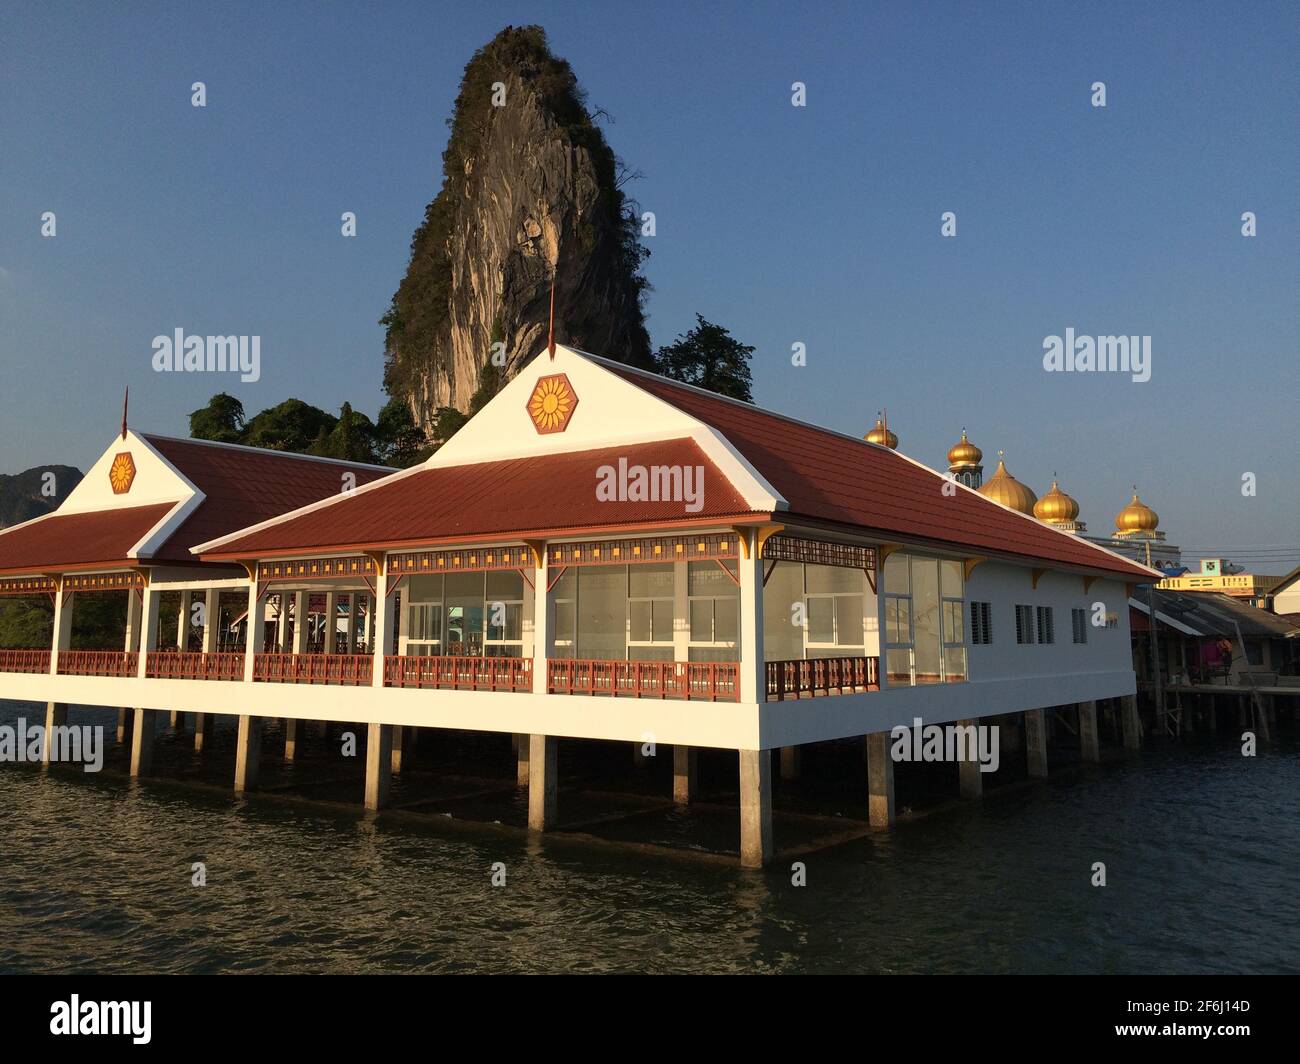 Koh Panyi, Phang Nga, Thailand - März 15 2016: Long-Tail Touristenboote parken am Ufer des schwimmenden Dorfes Koh Panyi Stockfoto